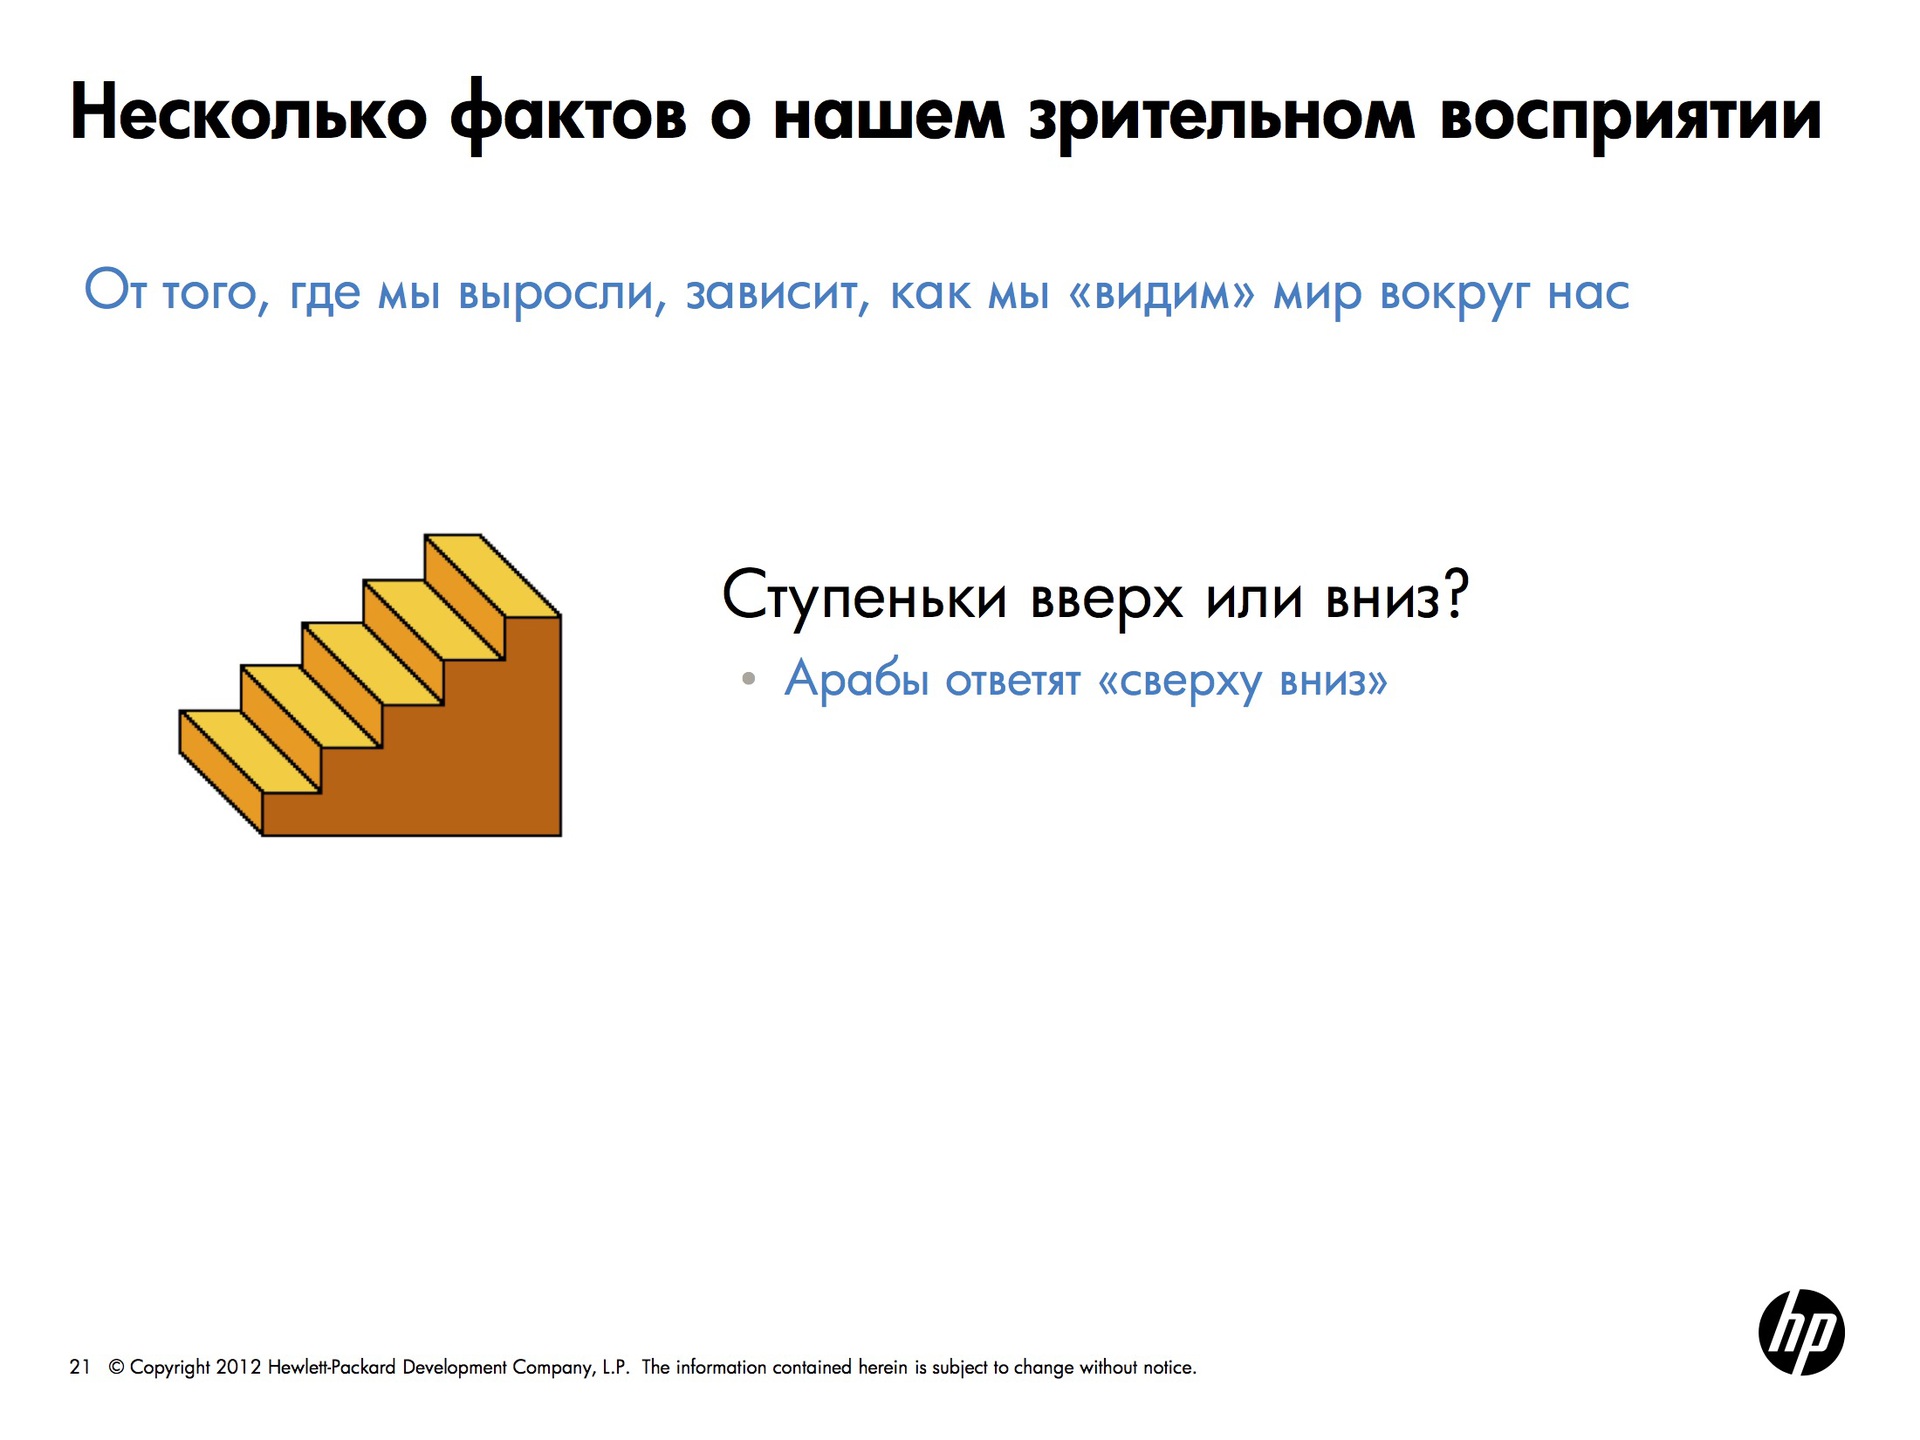 Введение в курс «Анализ изображений и видео». Лекции от Яндекса - 7